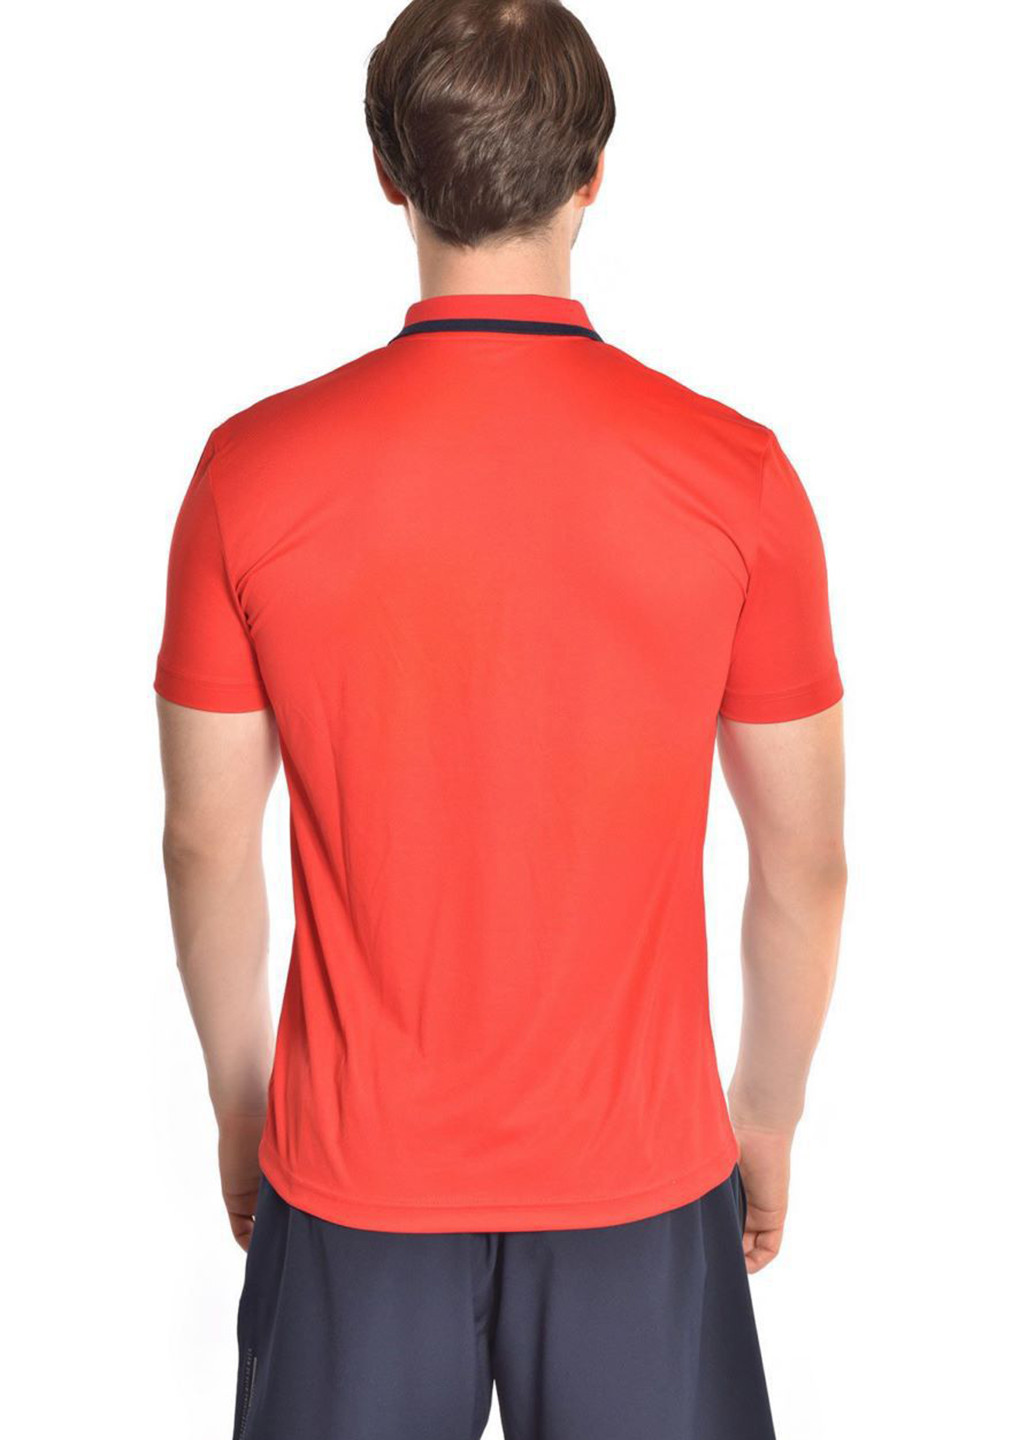 Красная футболка-поло для мужчин Bilcee однотонная